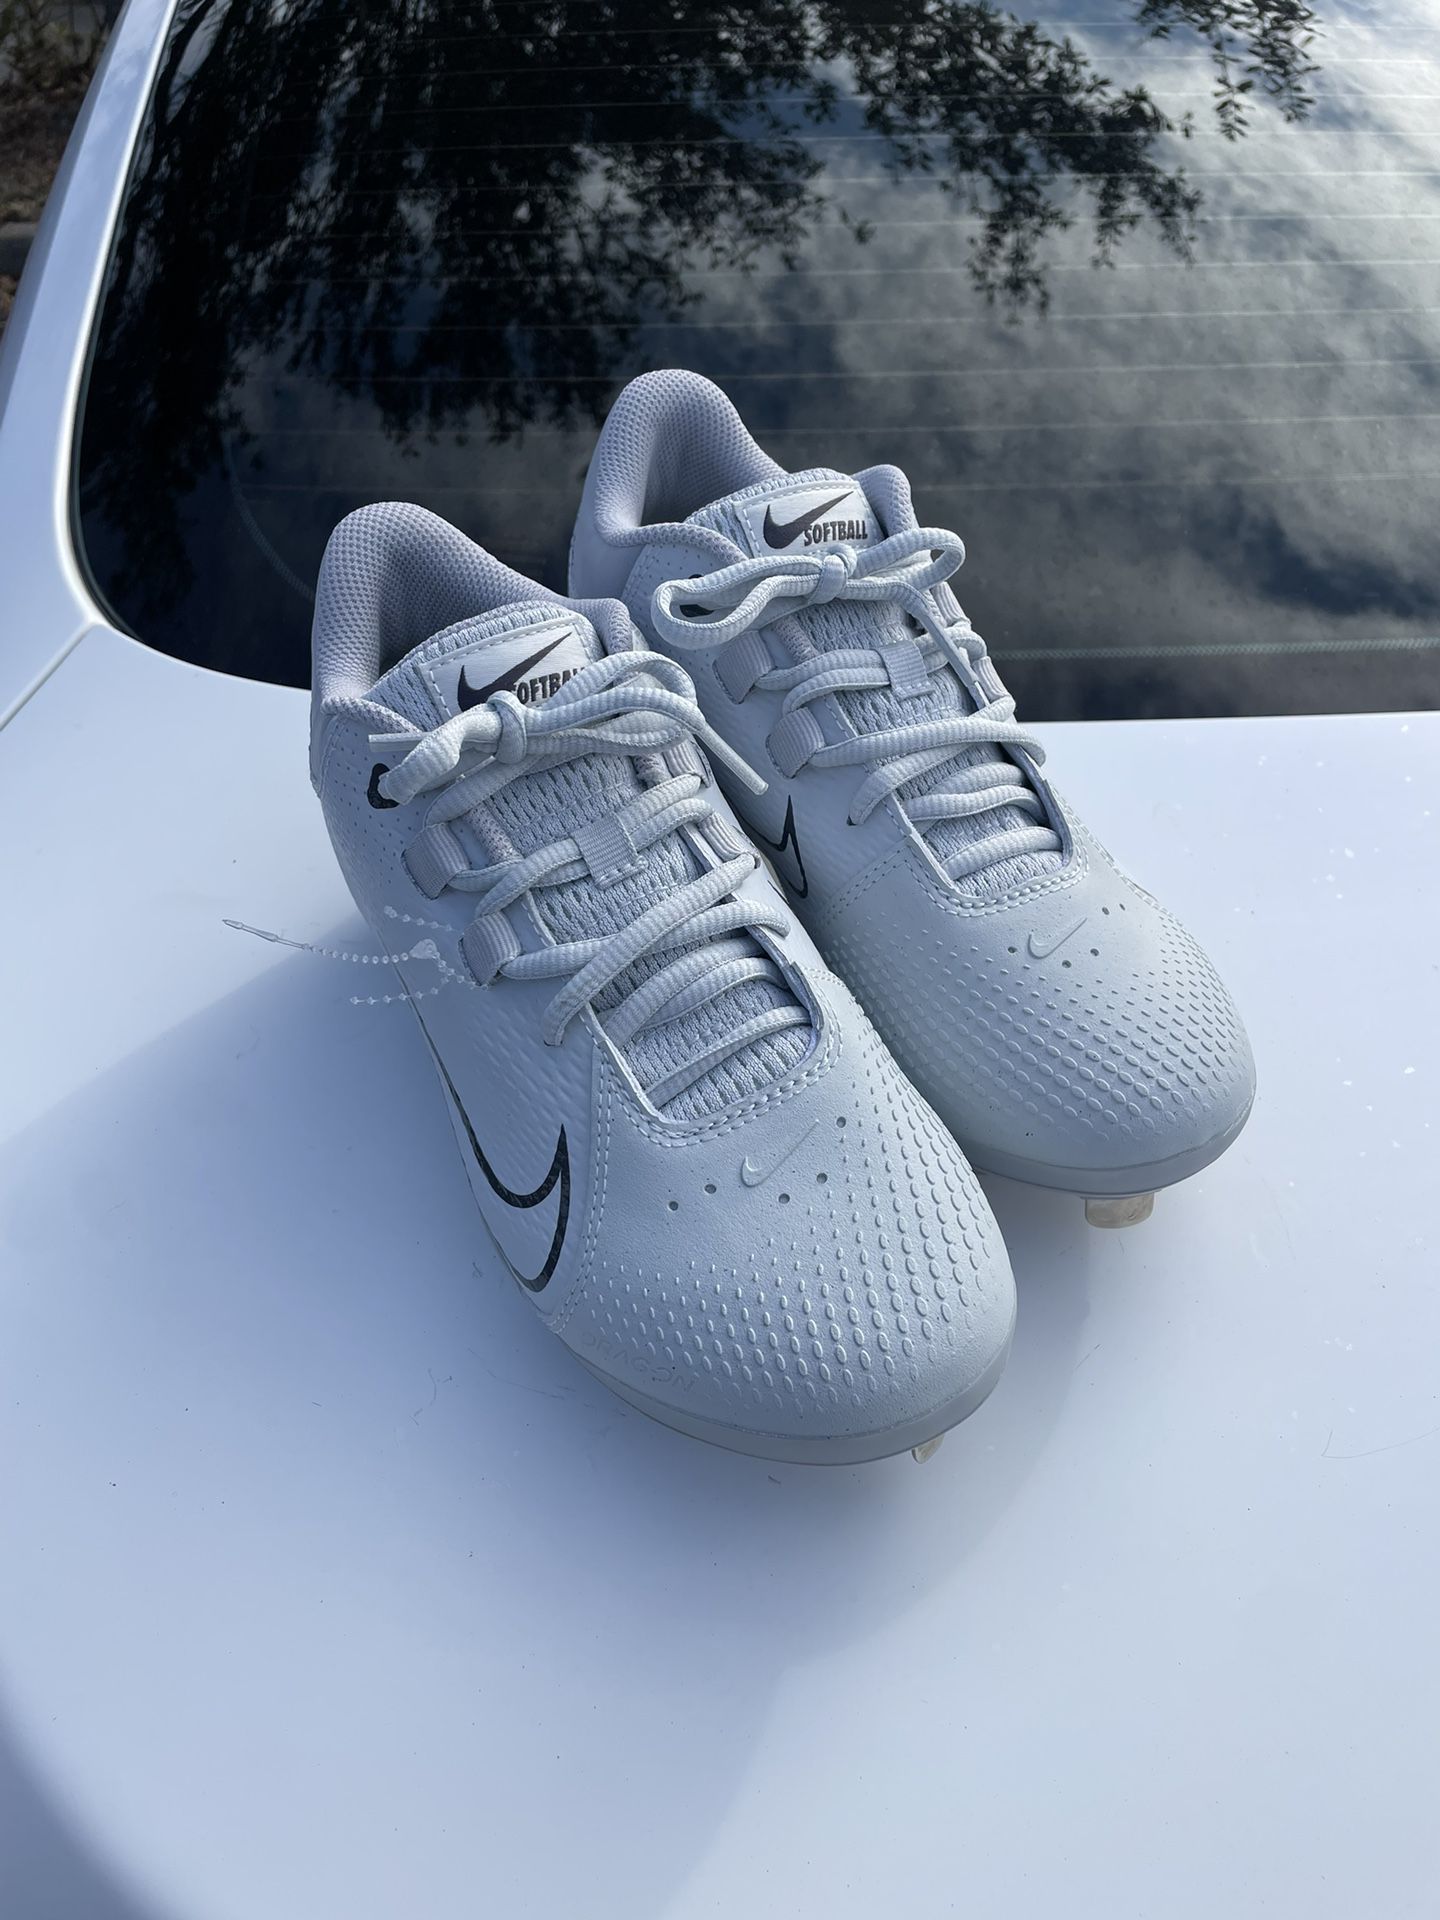 Nike Metal Softball Cleats, brand new